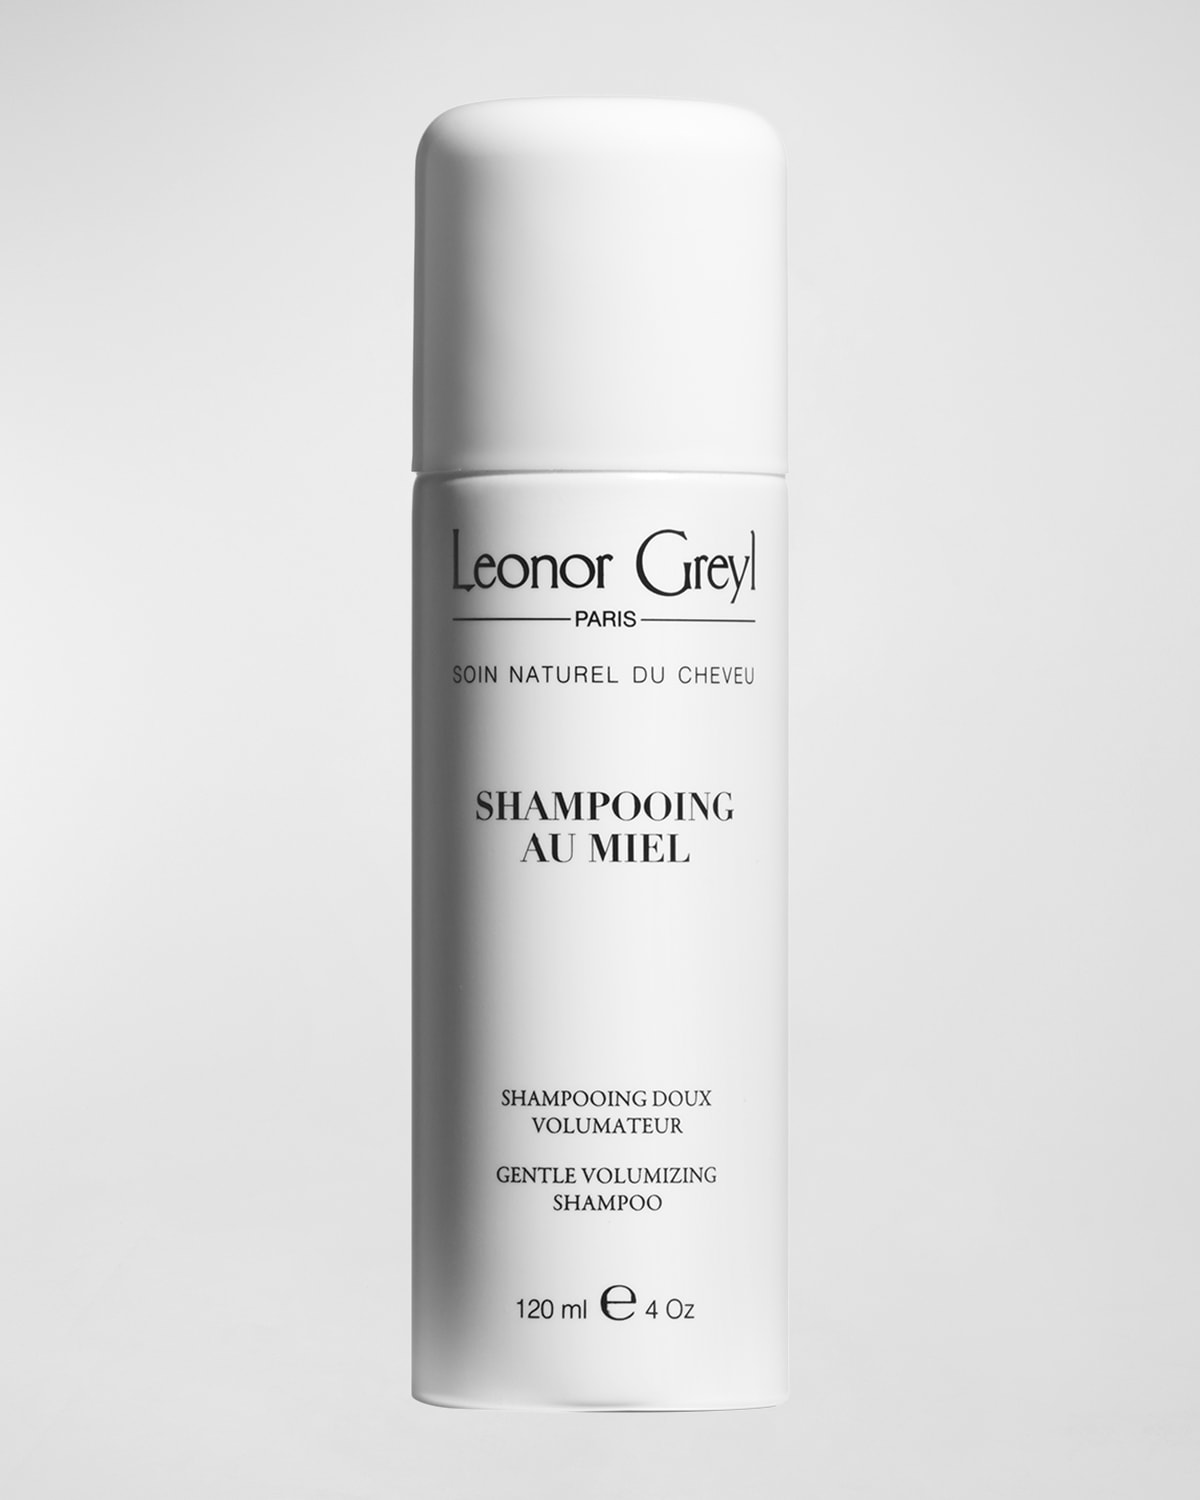 Leonor Greyl Shampooing au Miel (Gentle Volumizing Shampoo), 4.0 oz./ 120 mL